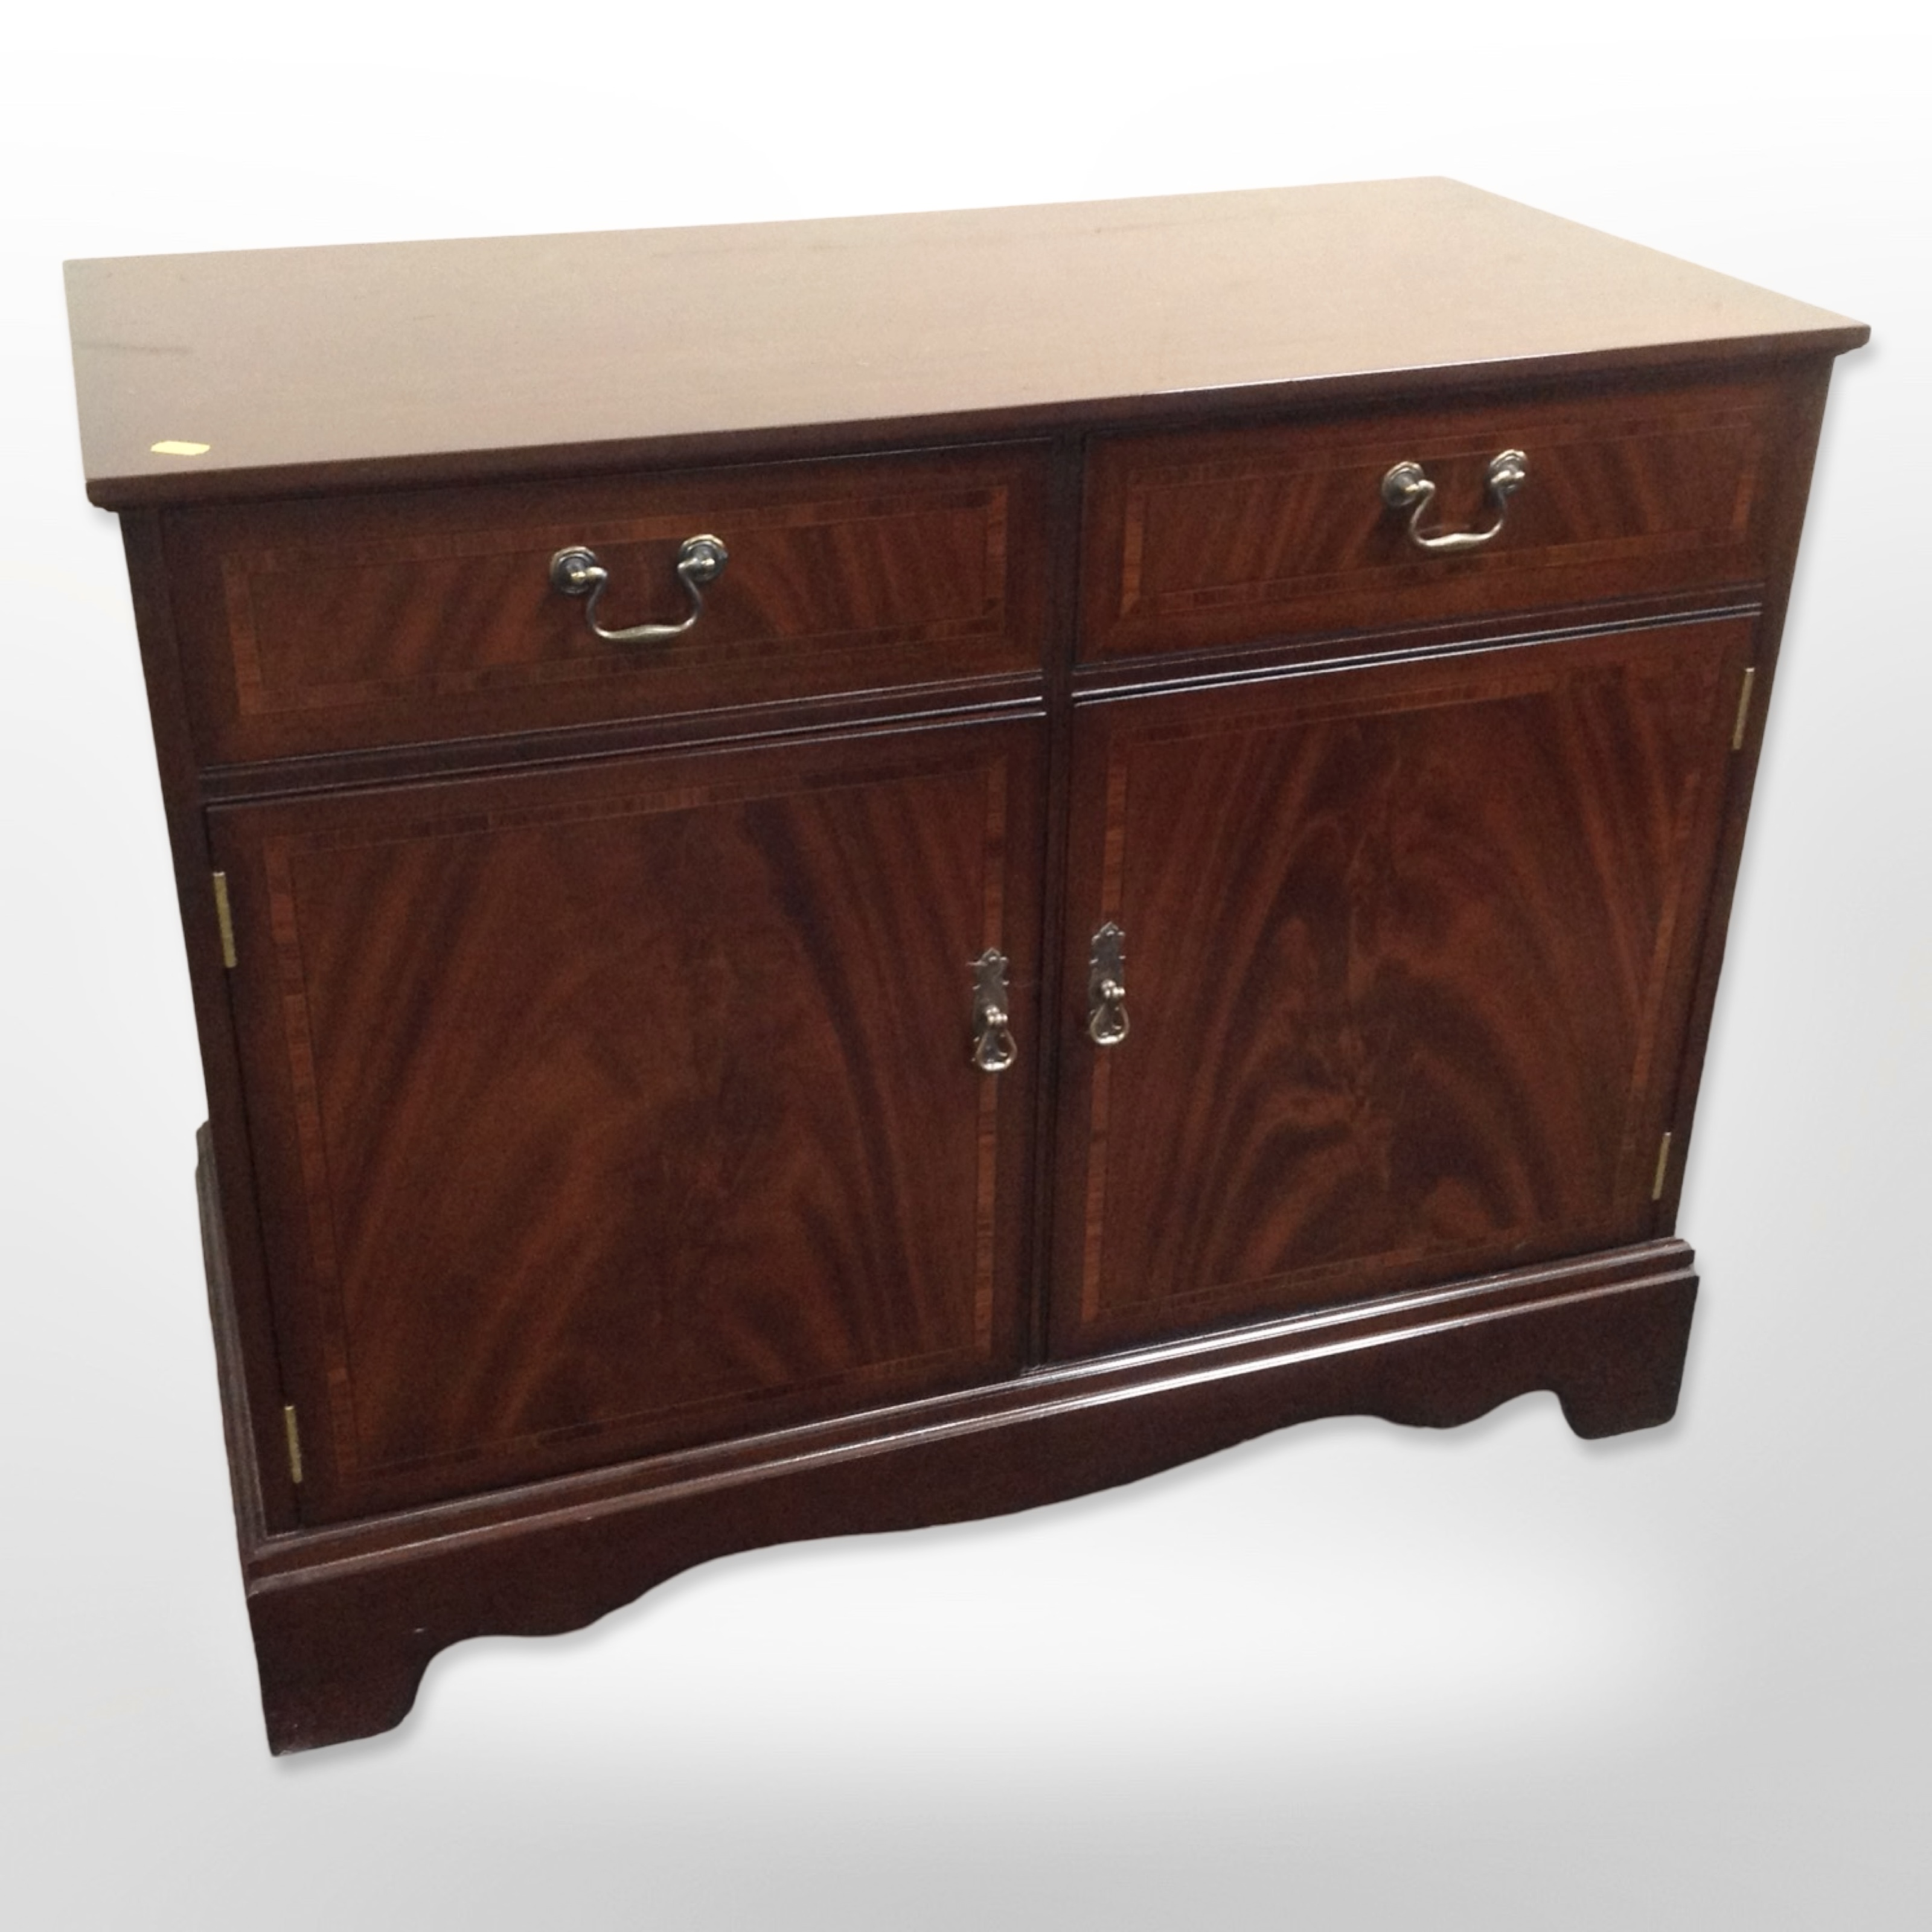 A reproduction Bridgecraft mahogany side cabinet,